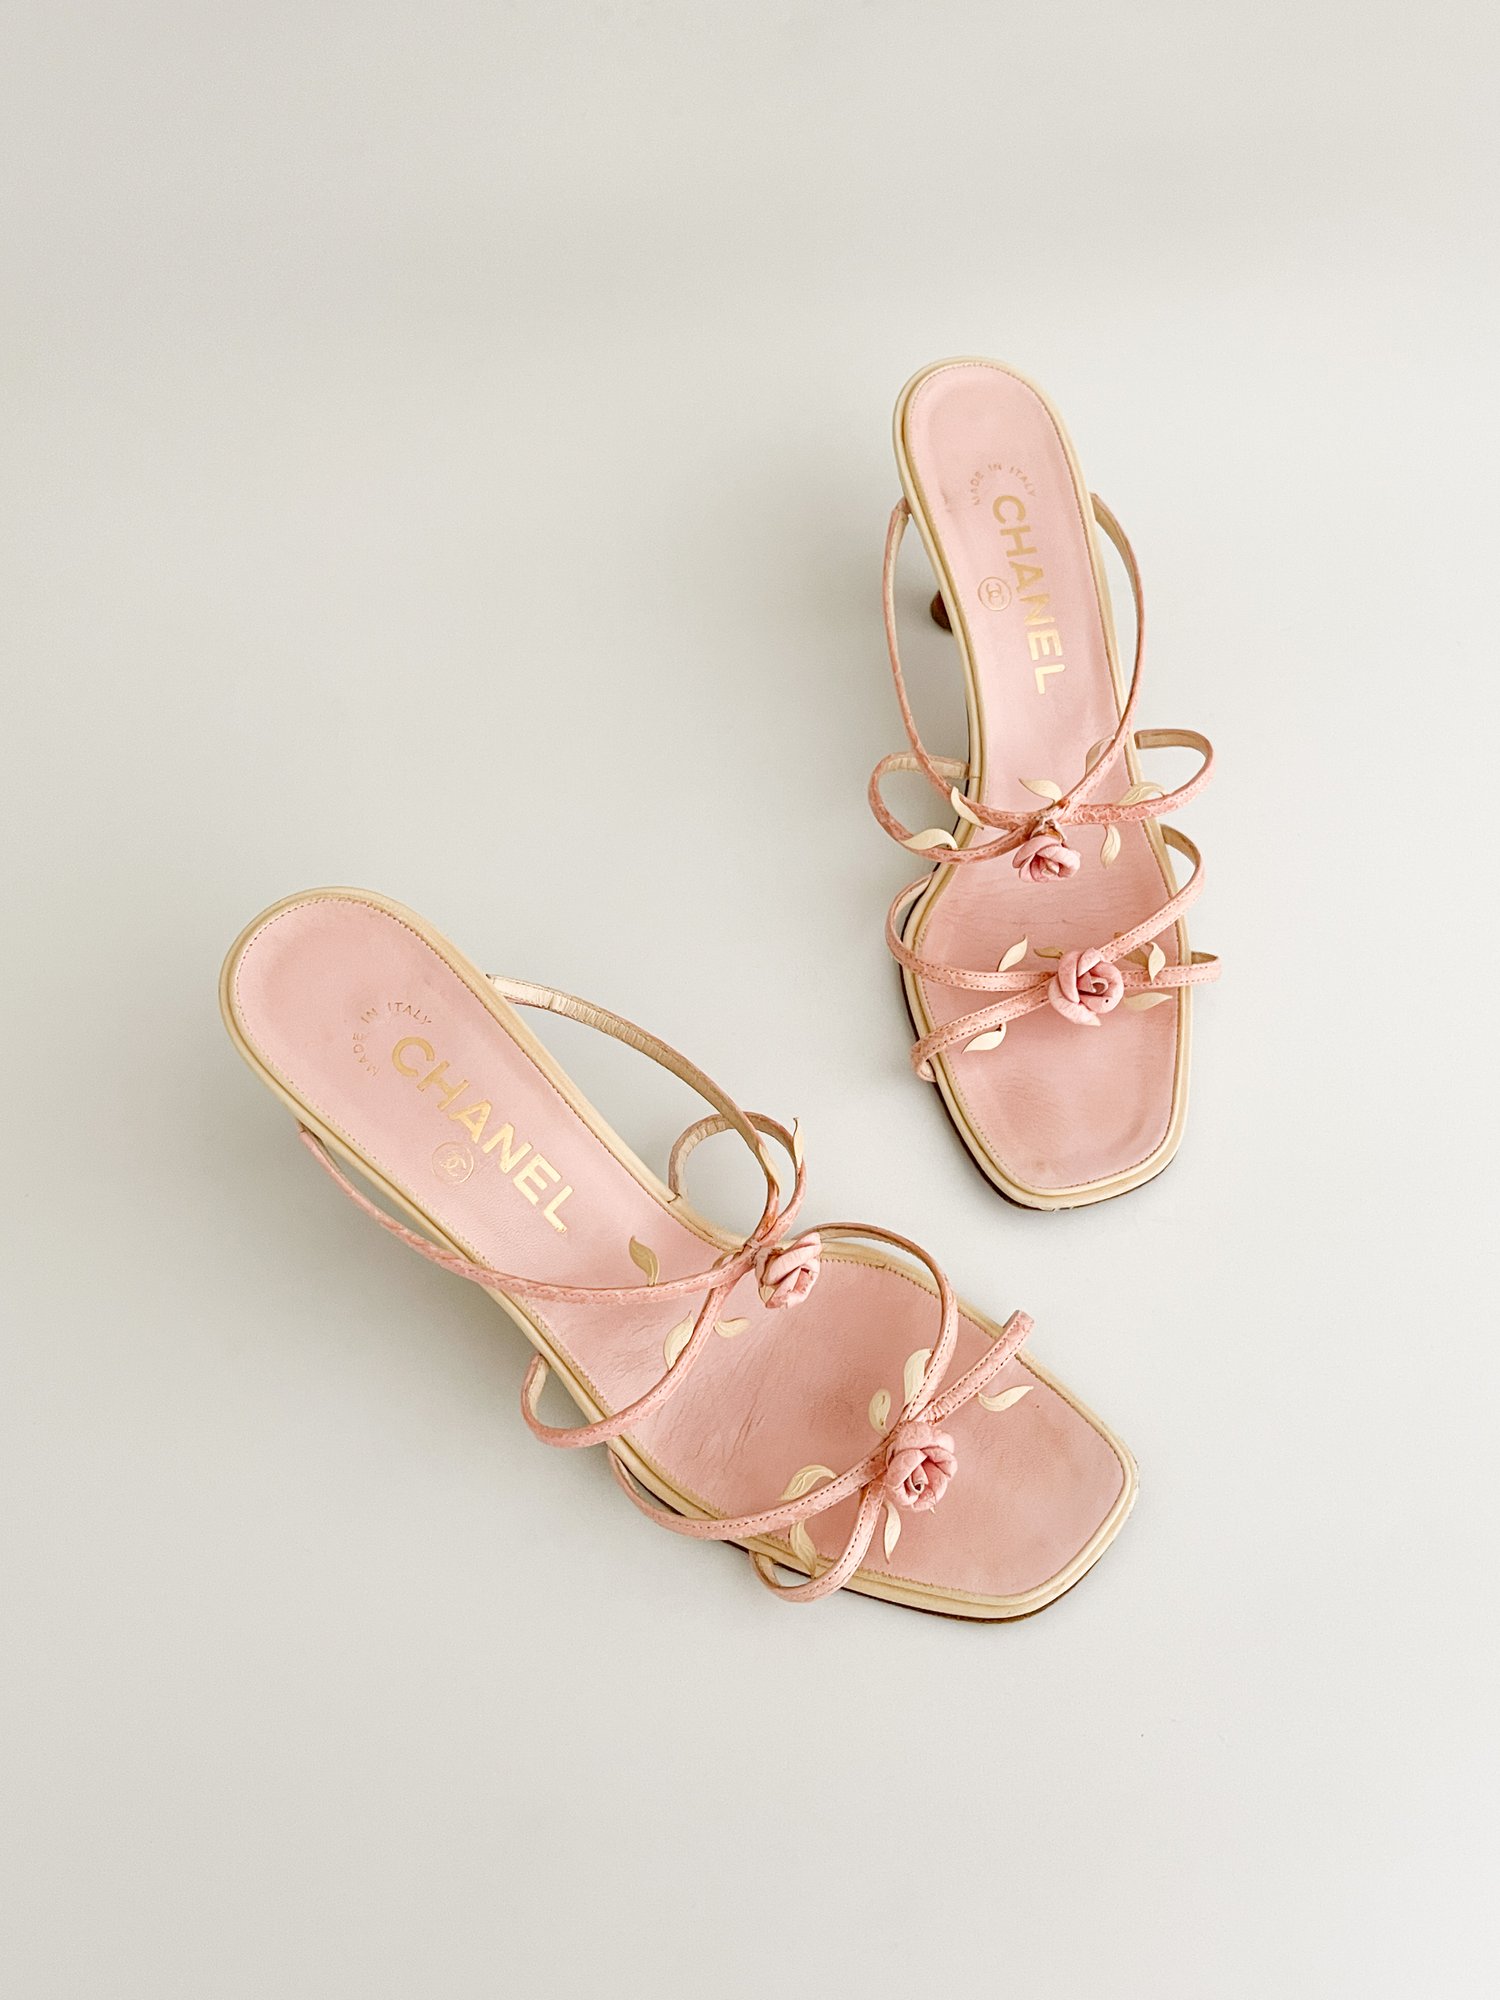 chanel pink flip flops 8